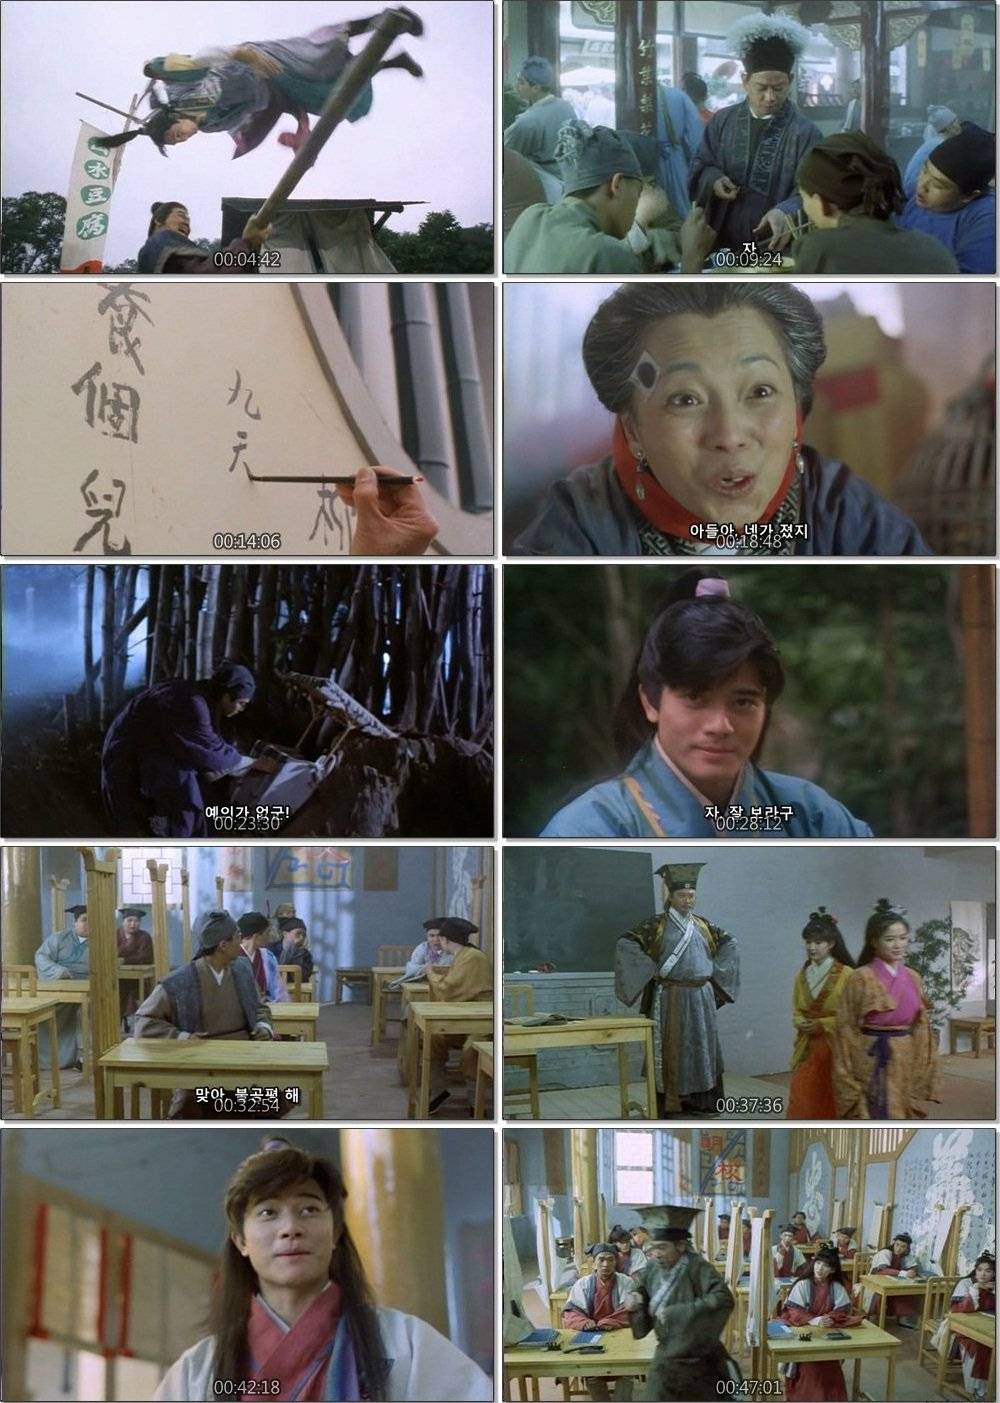 The Kung Fu Scholar (1993)